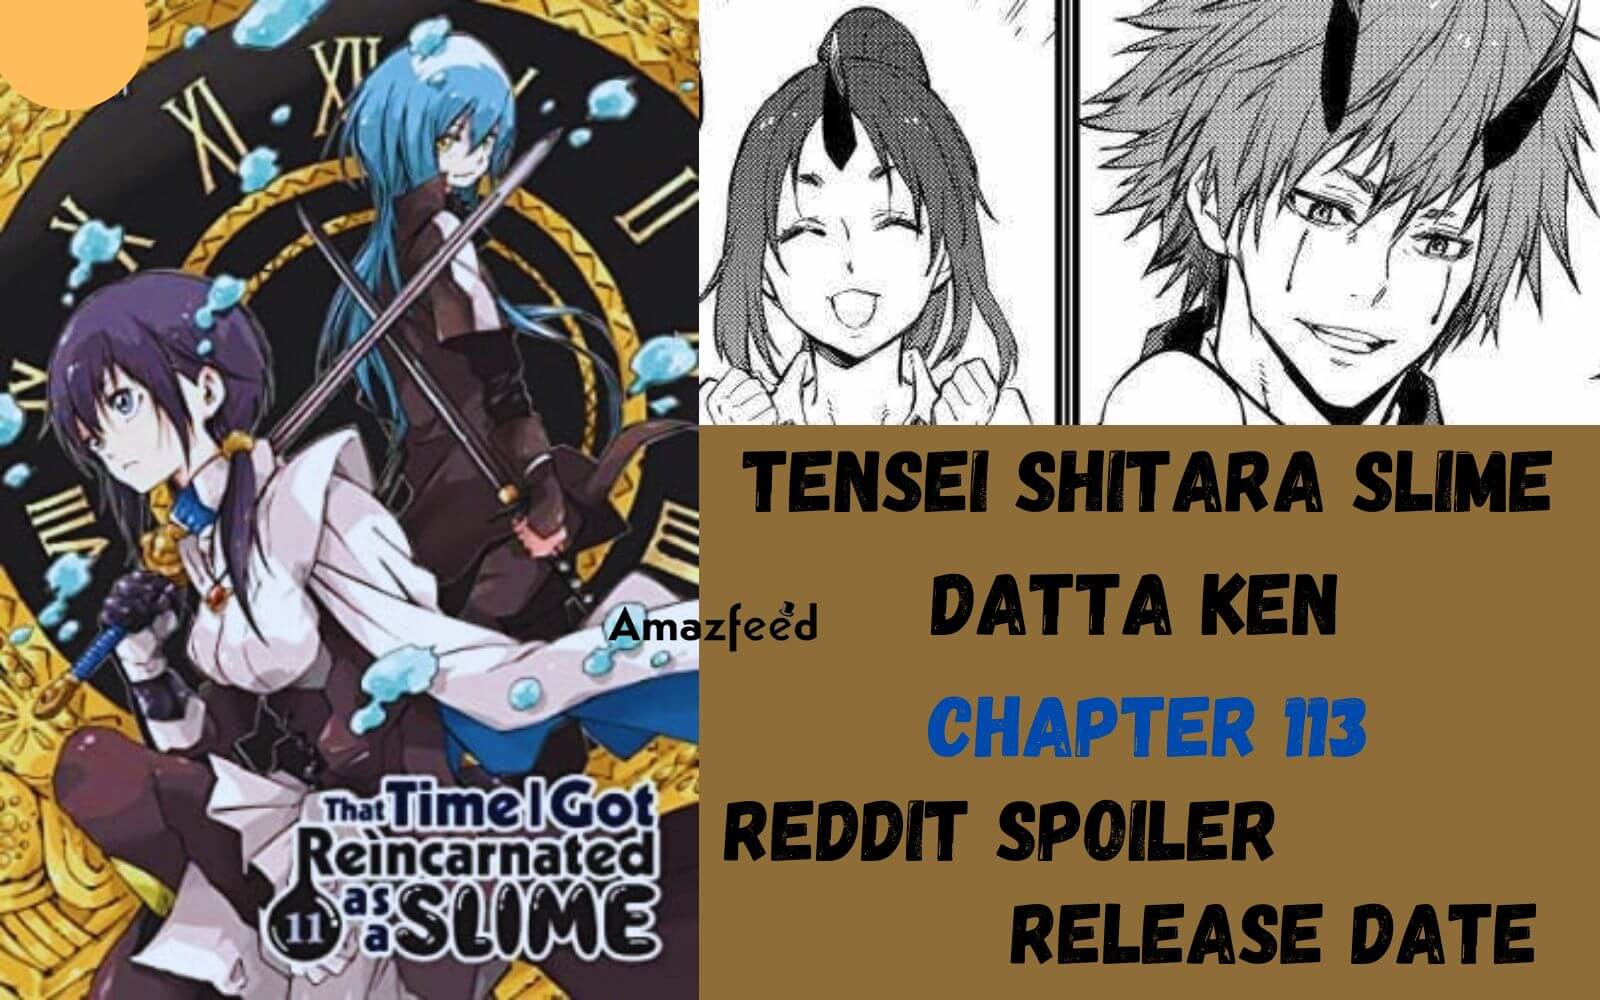 Ler Capítulo 112 Tensei Shitara Slime Datta Ken - Slimeread